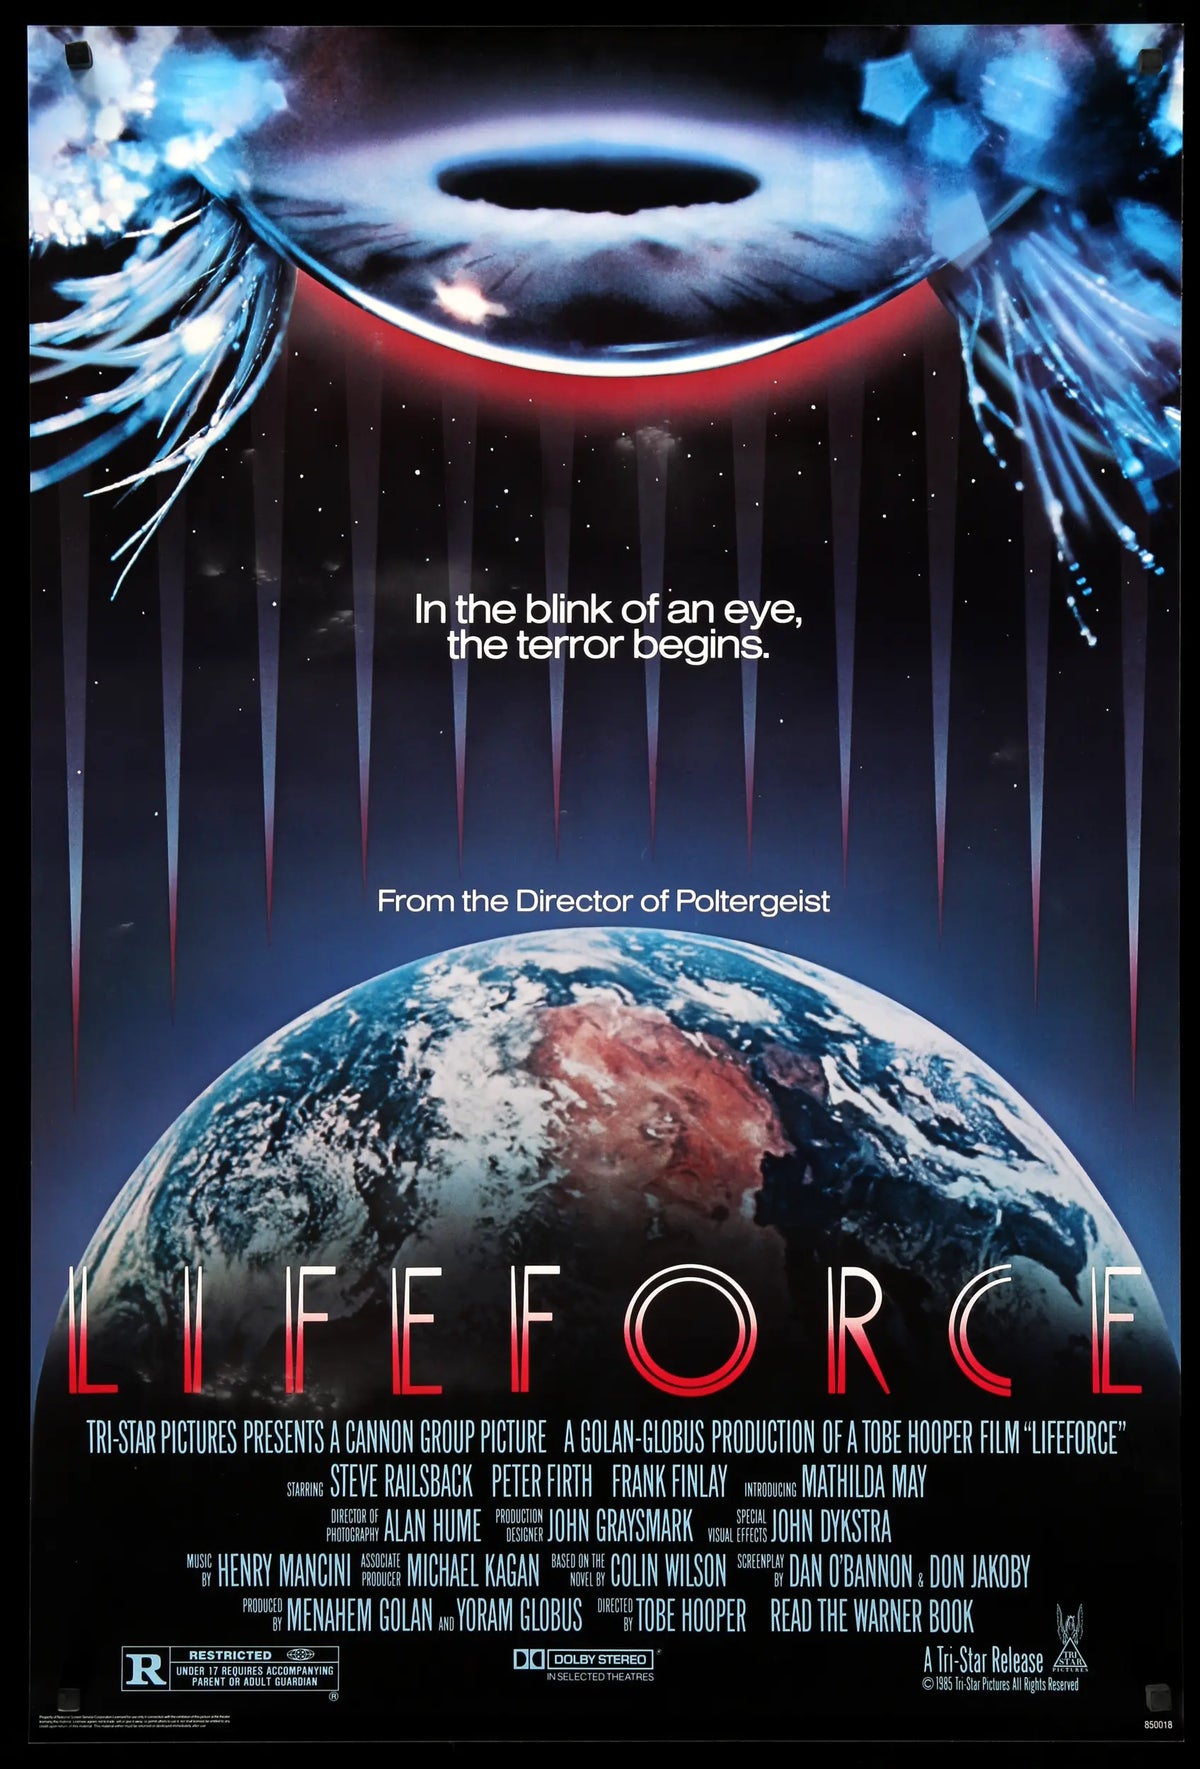 Lifeforce (1985) original movie poster for sale at Original Film Art